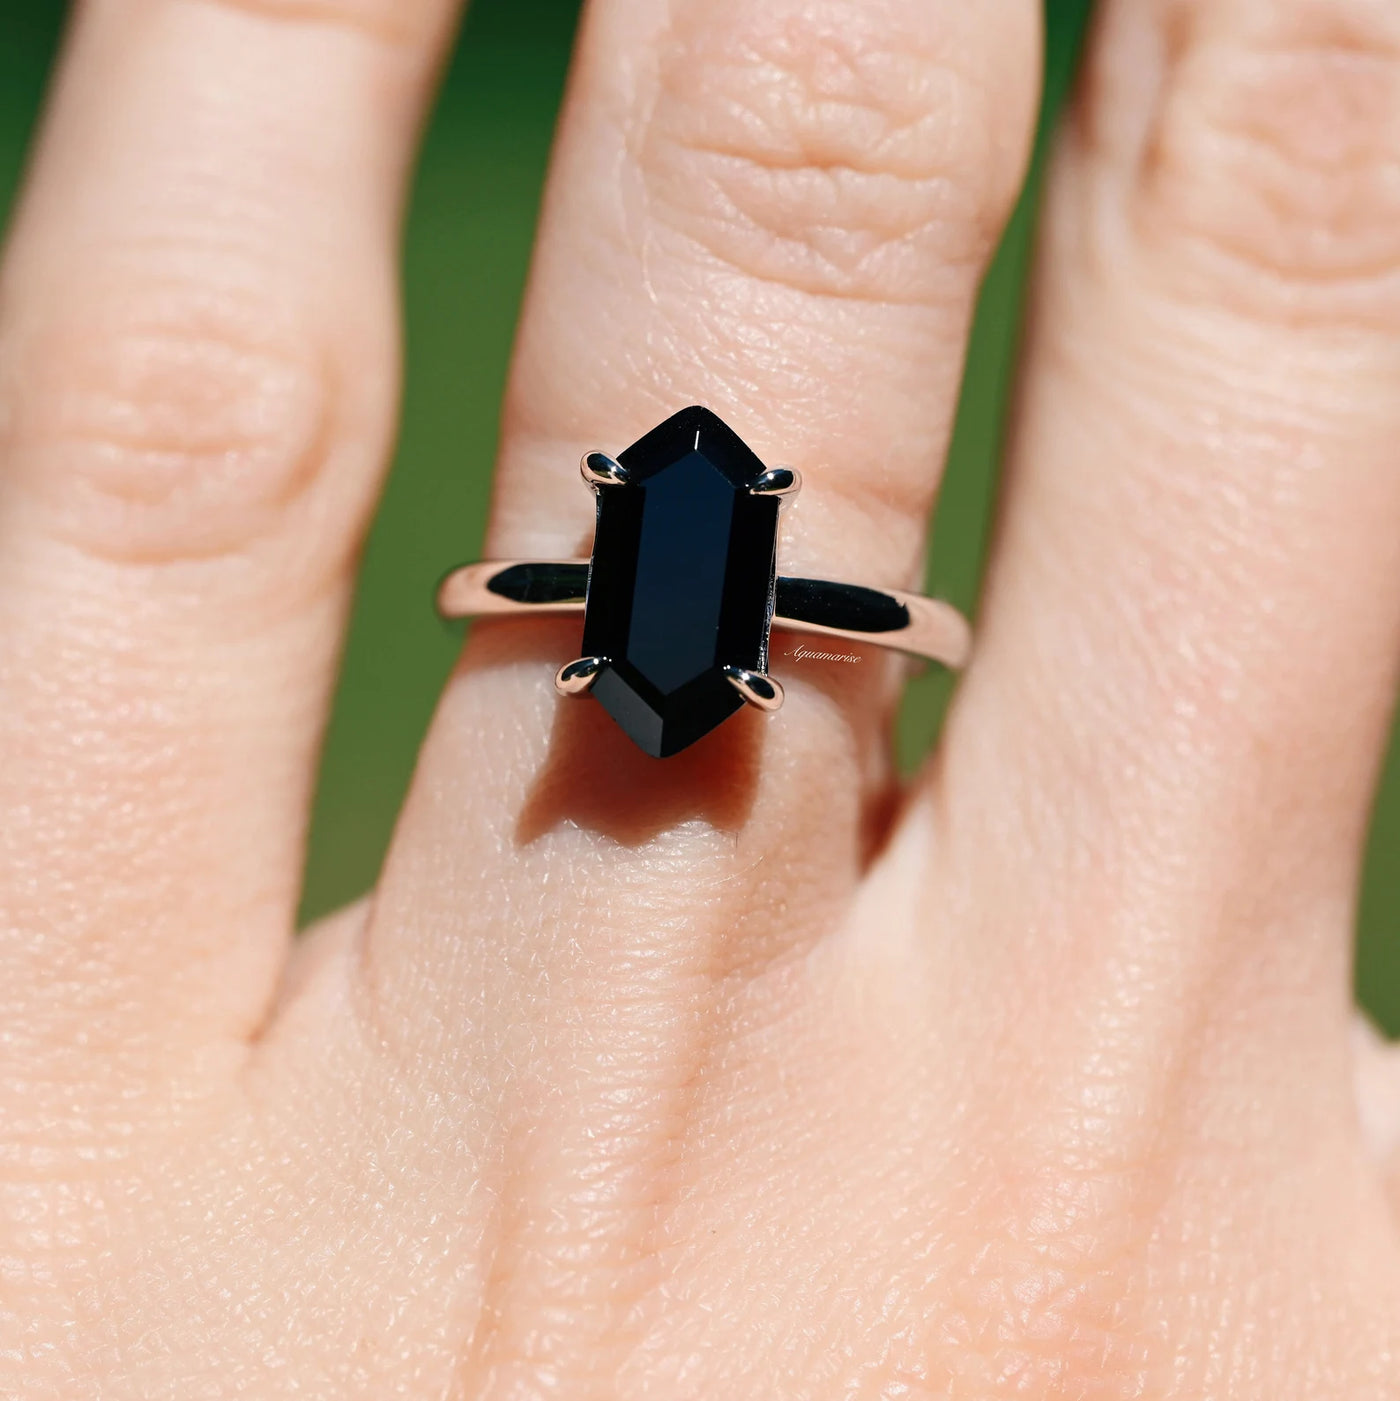 Hexagon Black Diamond Ring Set Unique Black Onyx Engagement Rings